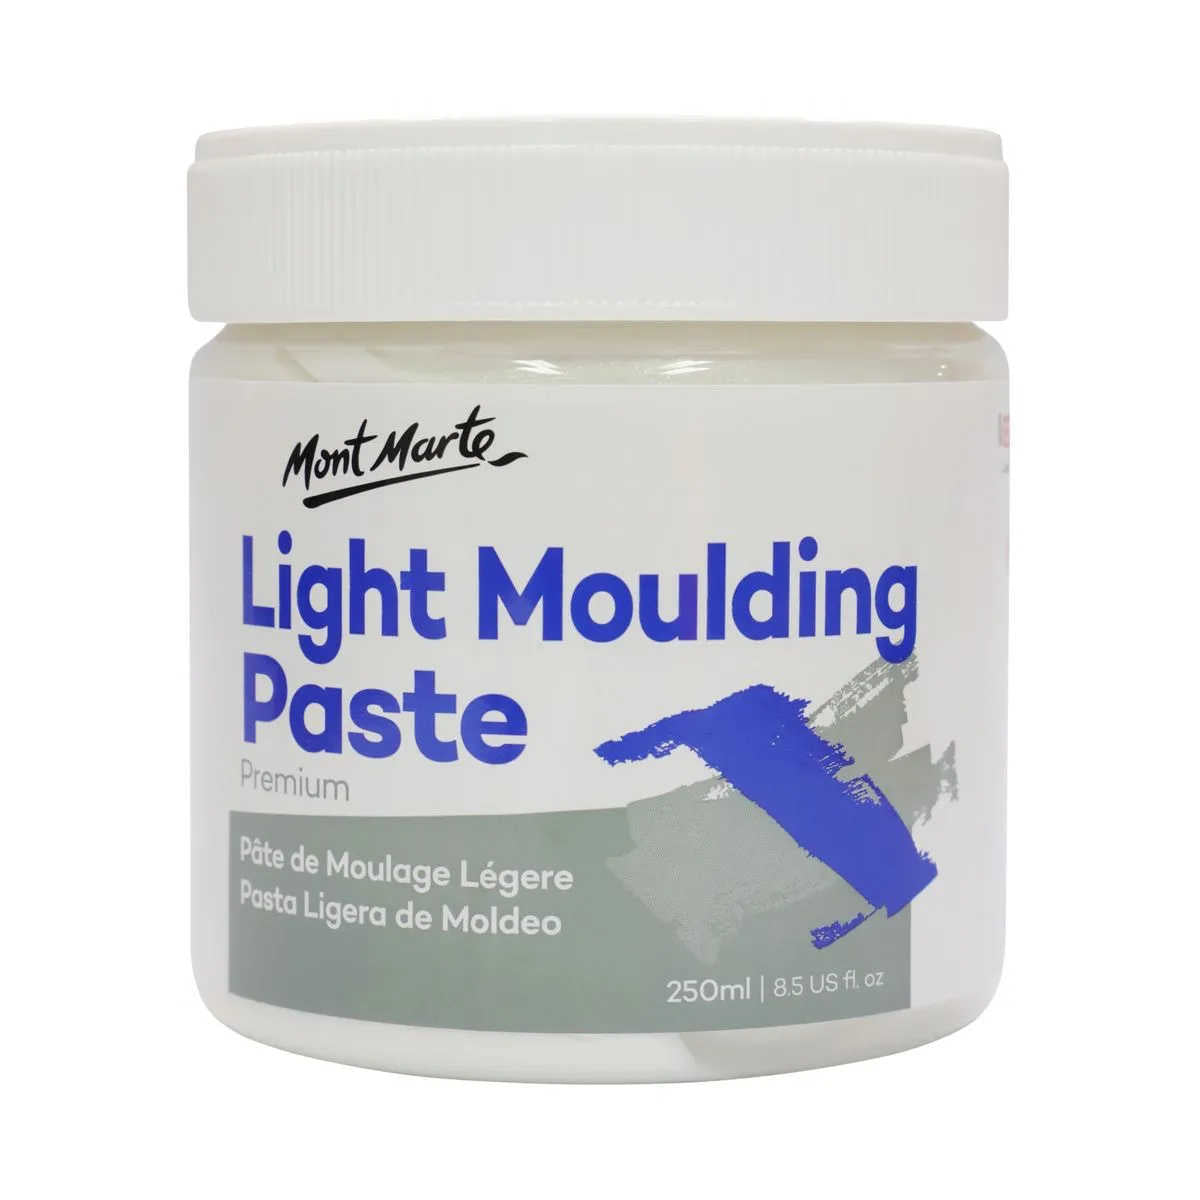 Monte Marte - Light Moulding Paste 250ml